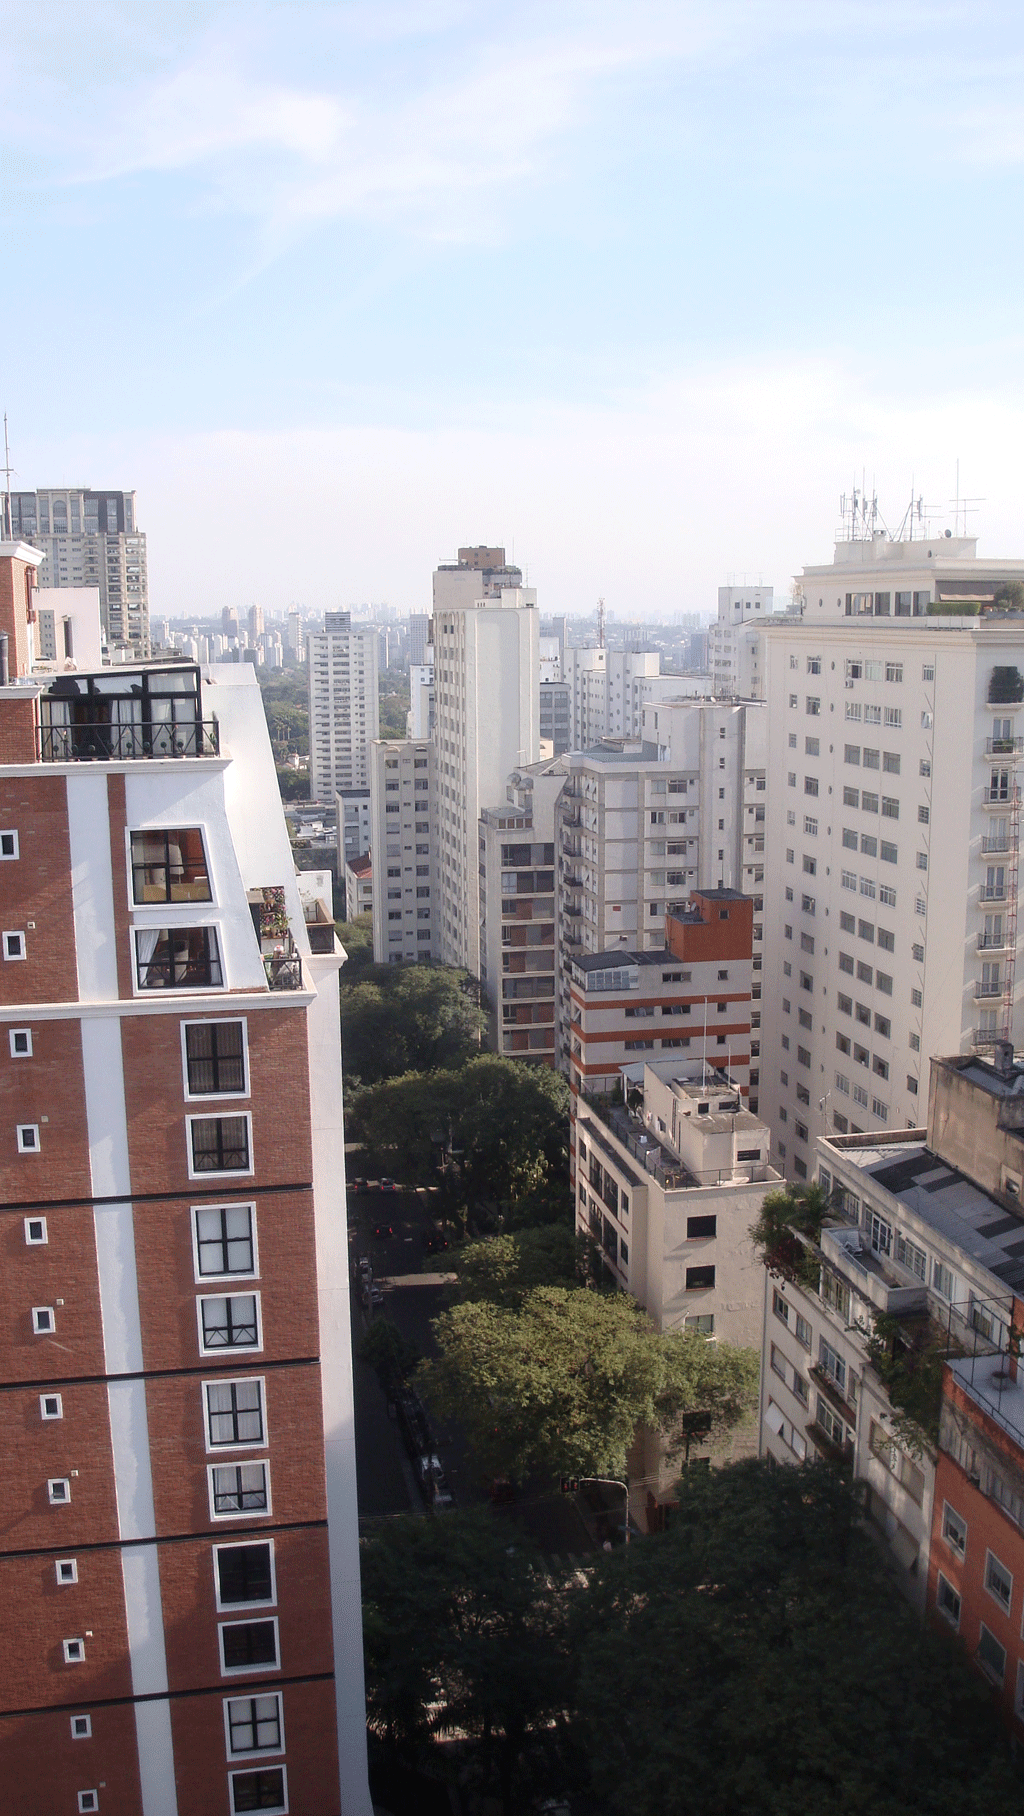 James Slattery's BCQS office view in Sao Paulo